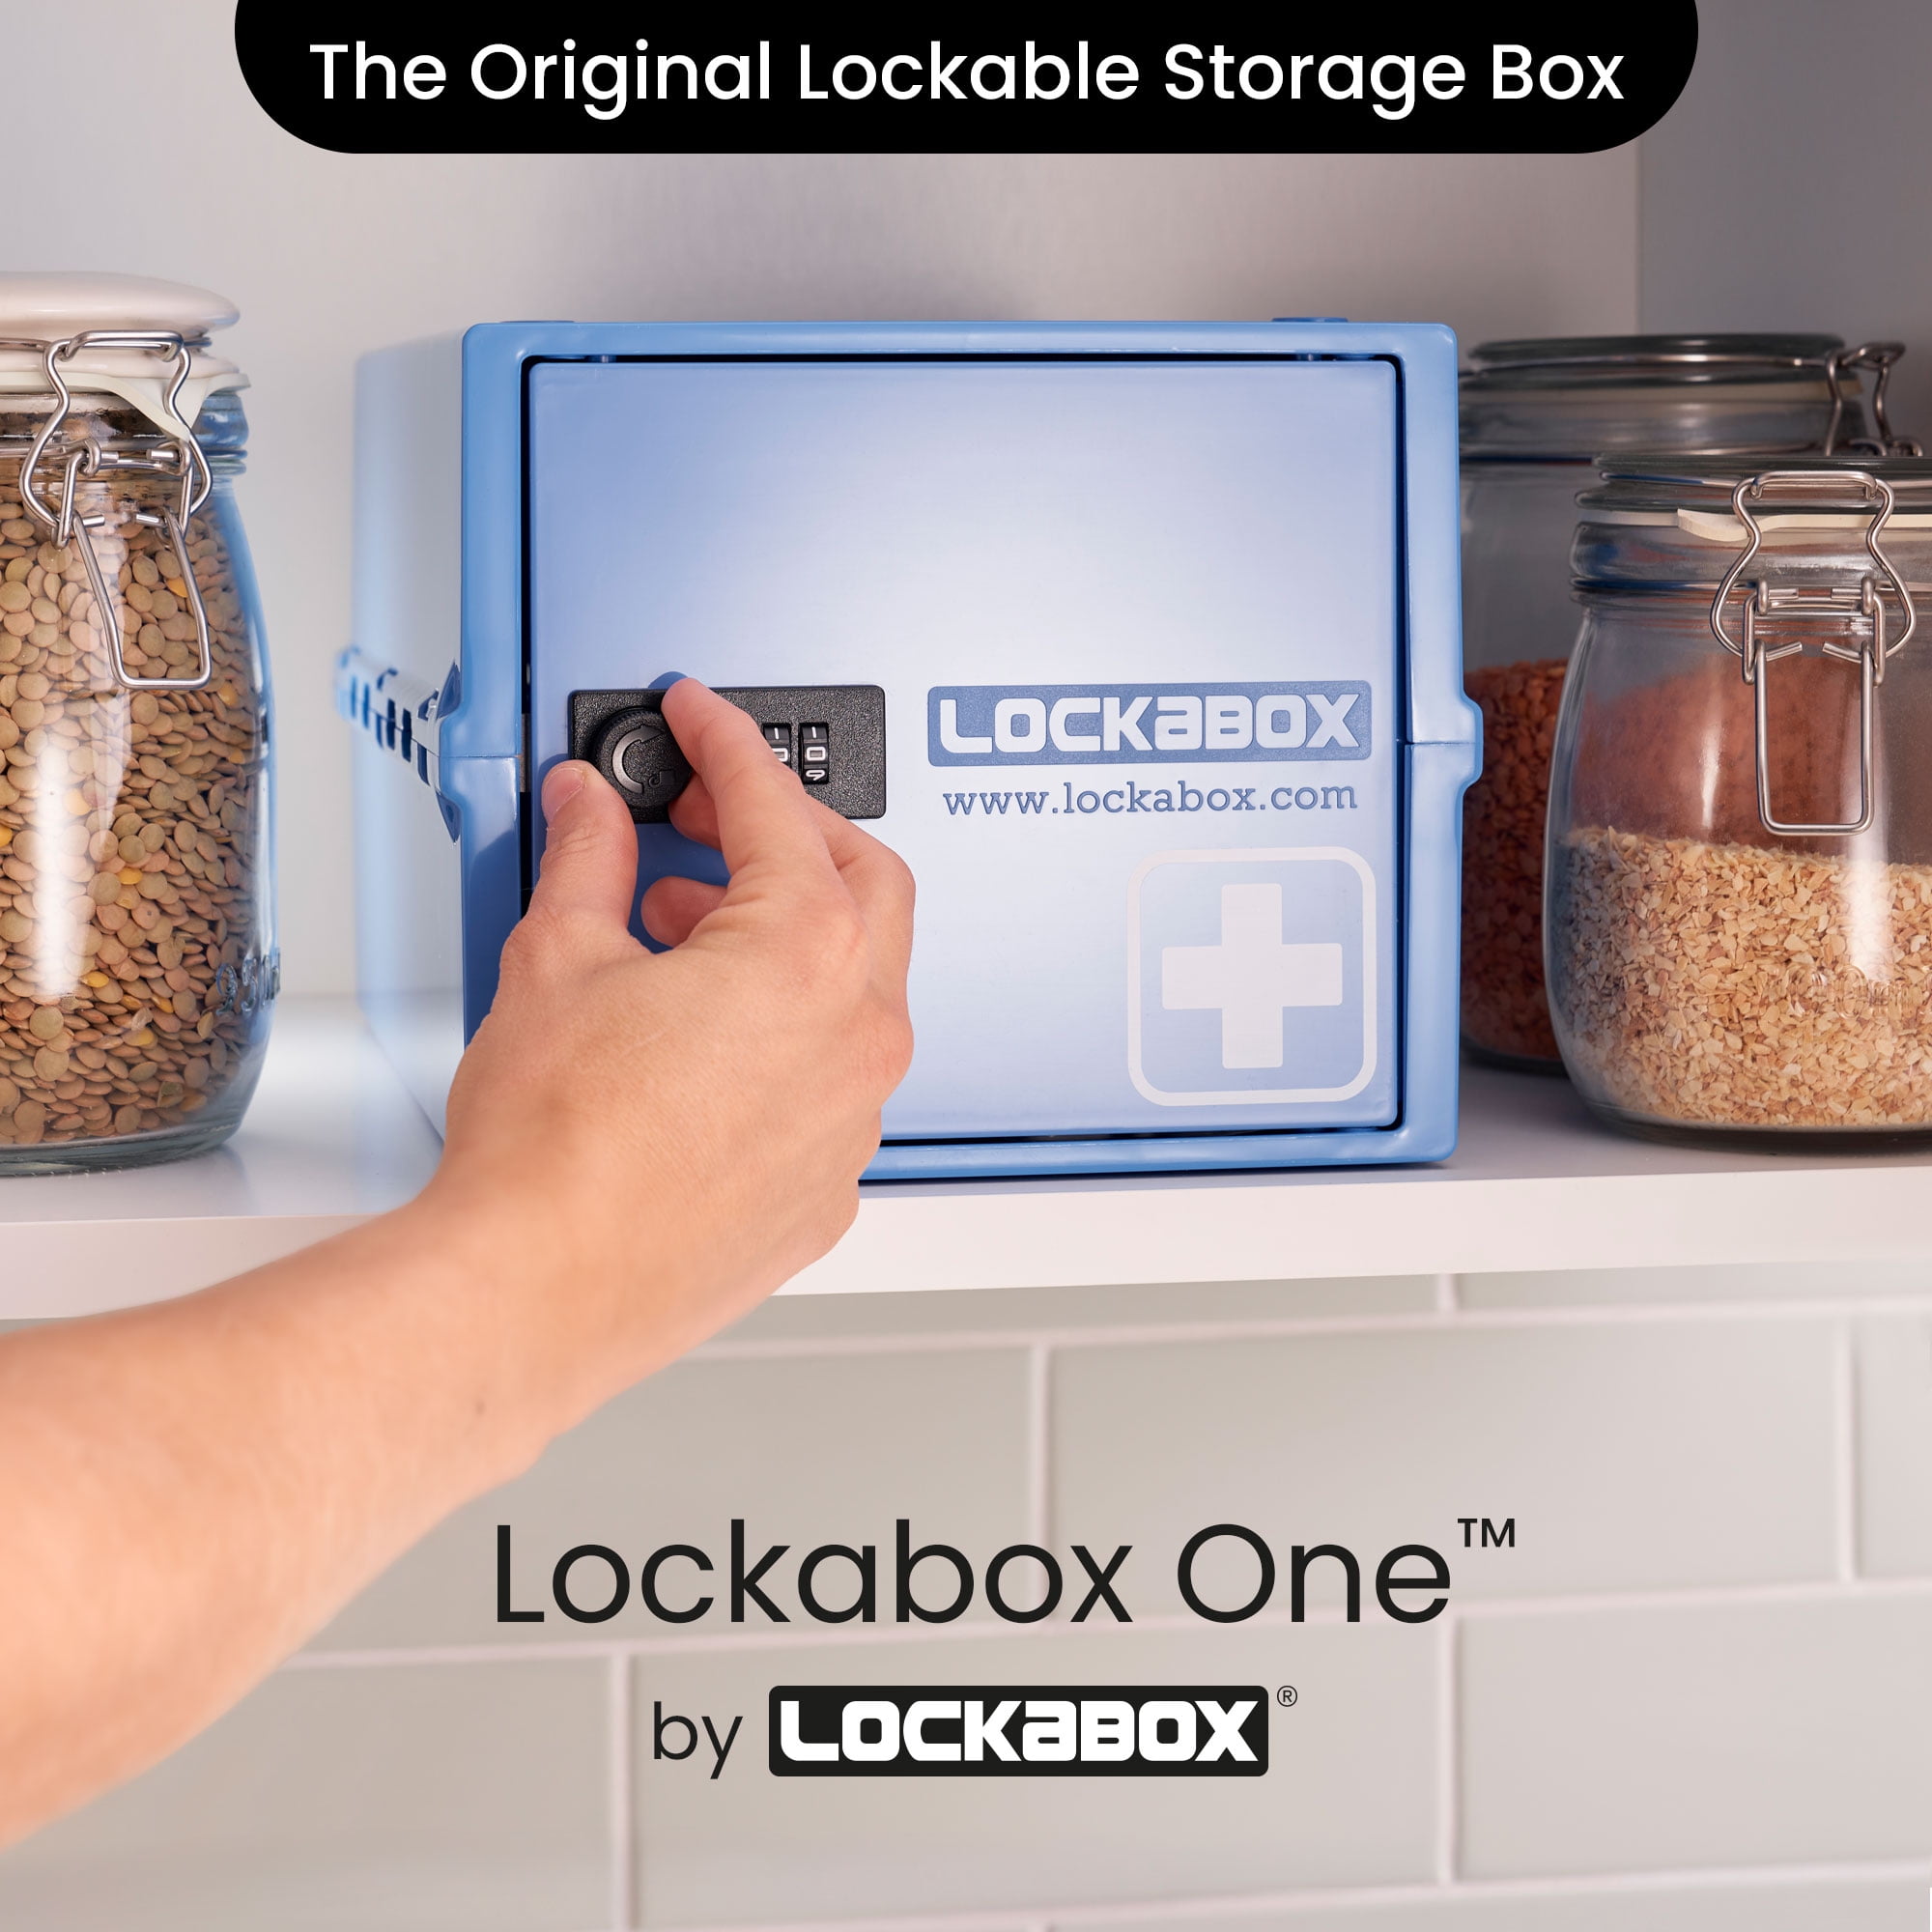 LockBox Food Storage